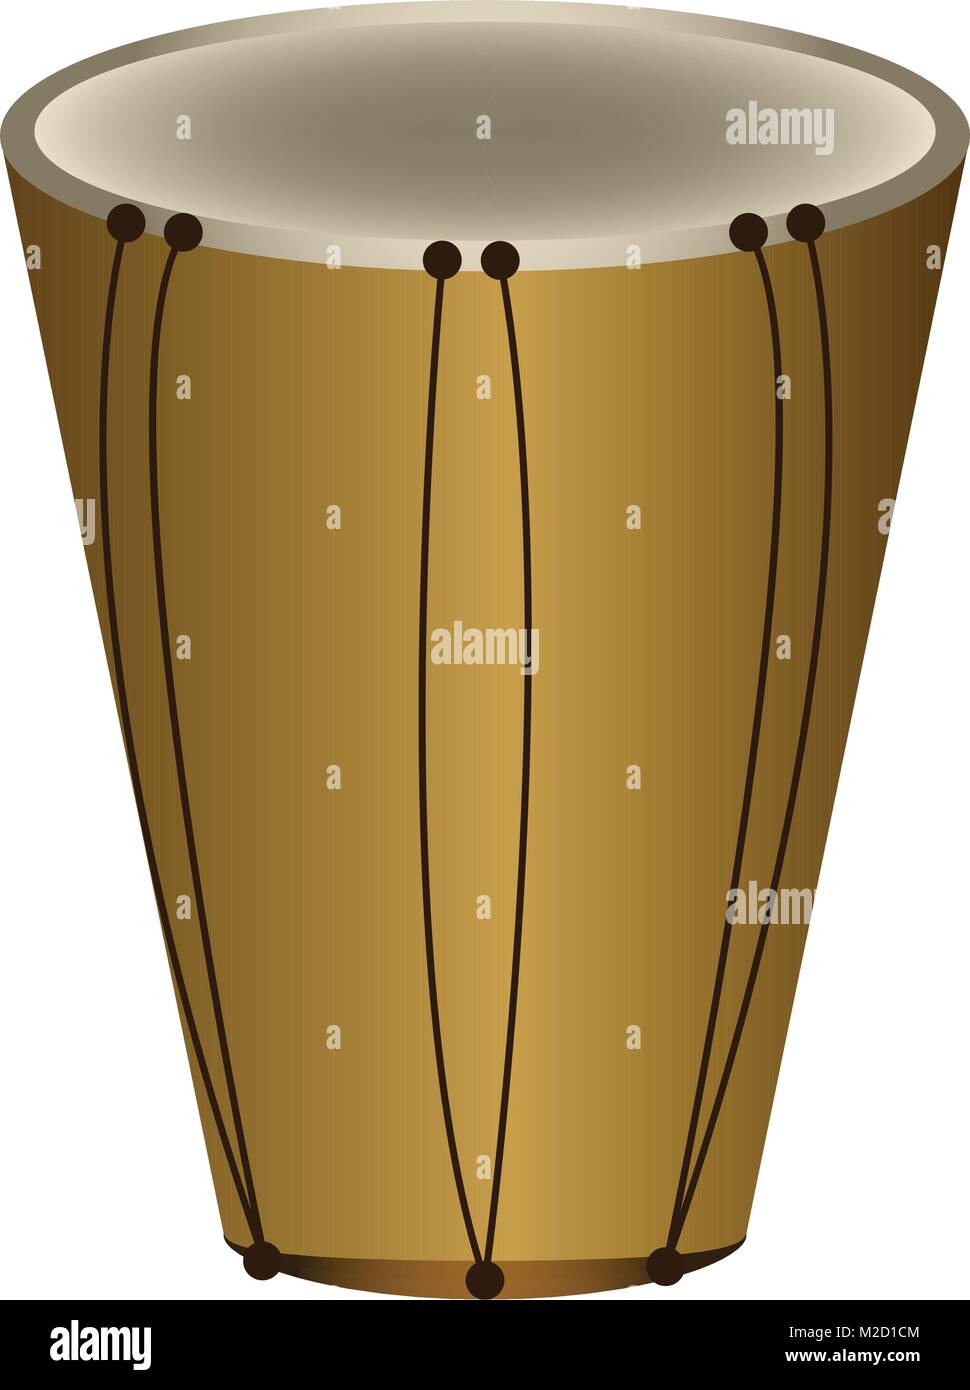 Isolierte Bass Drum. Musical Instrument Stock Vektor